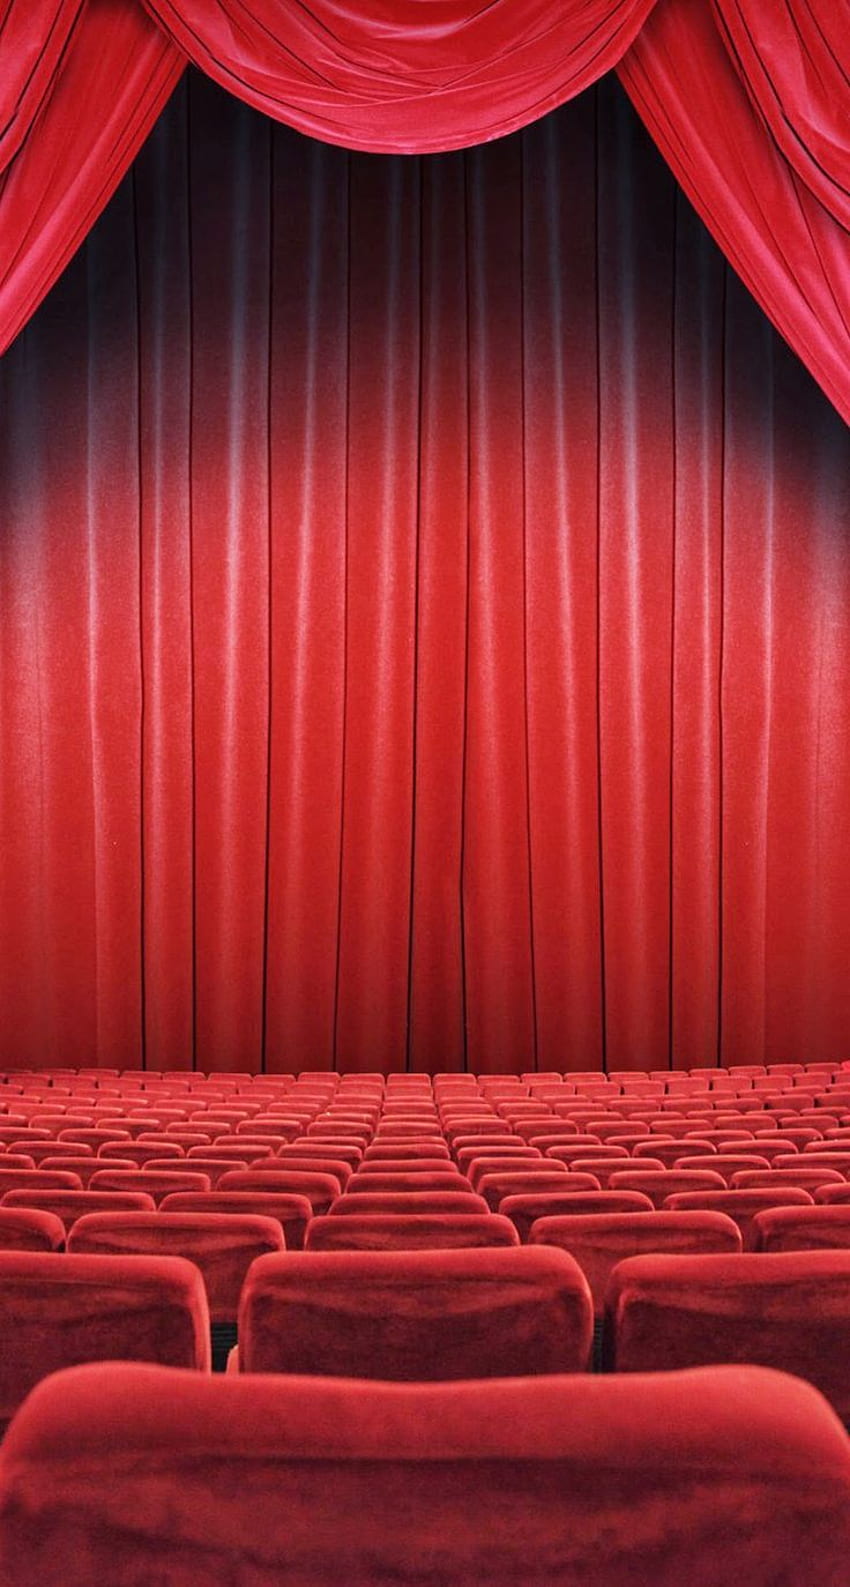 Kursi Teater Tirai Merah iPhone 6 Plus 1.028×1.920 piksel wallpaper ponsel HD